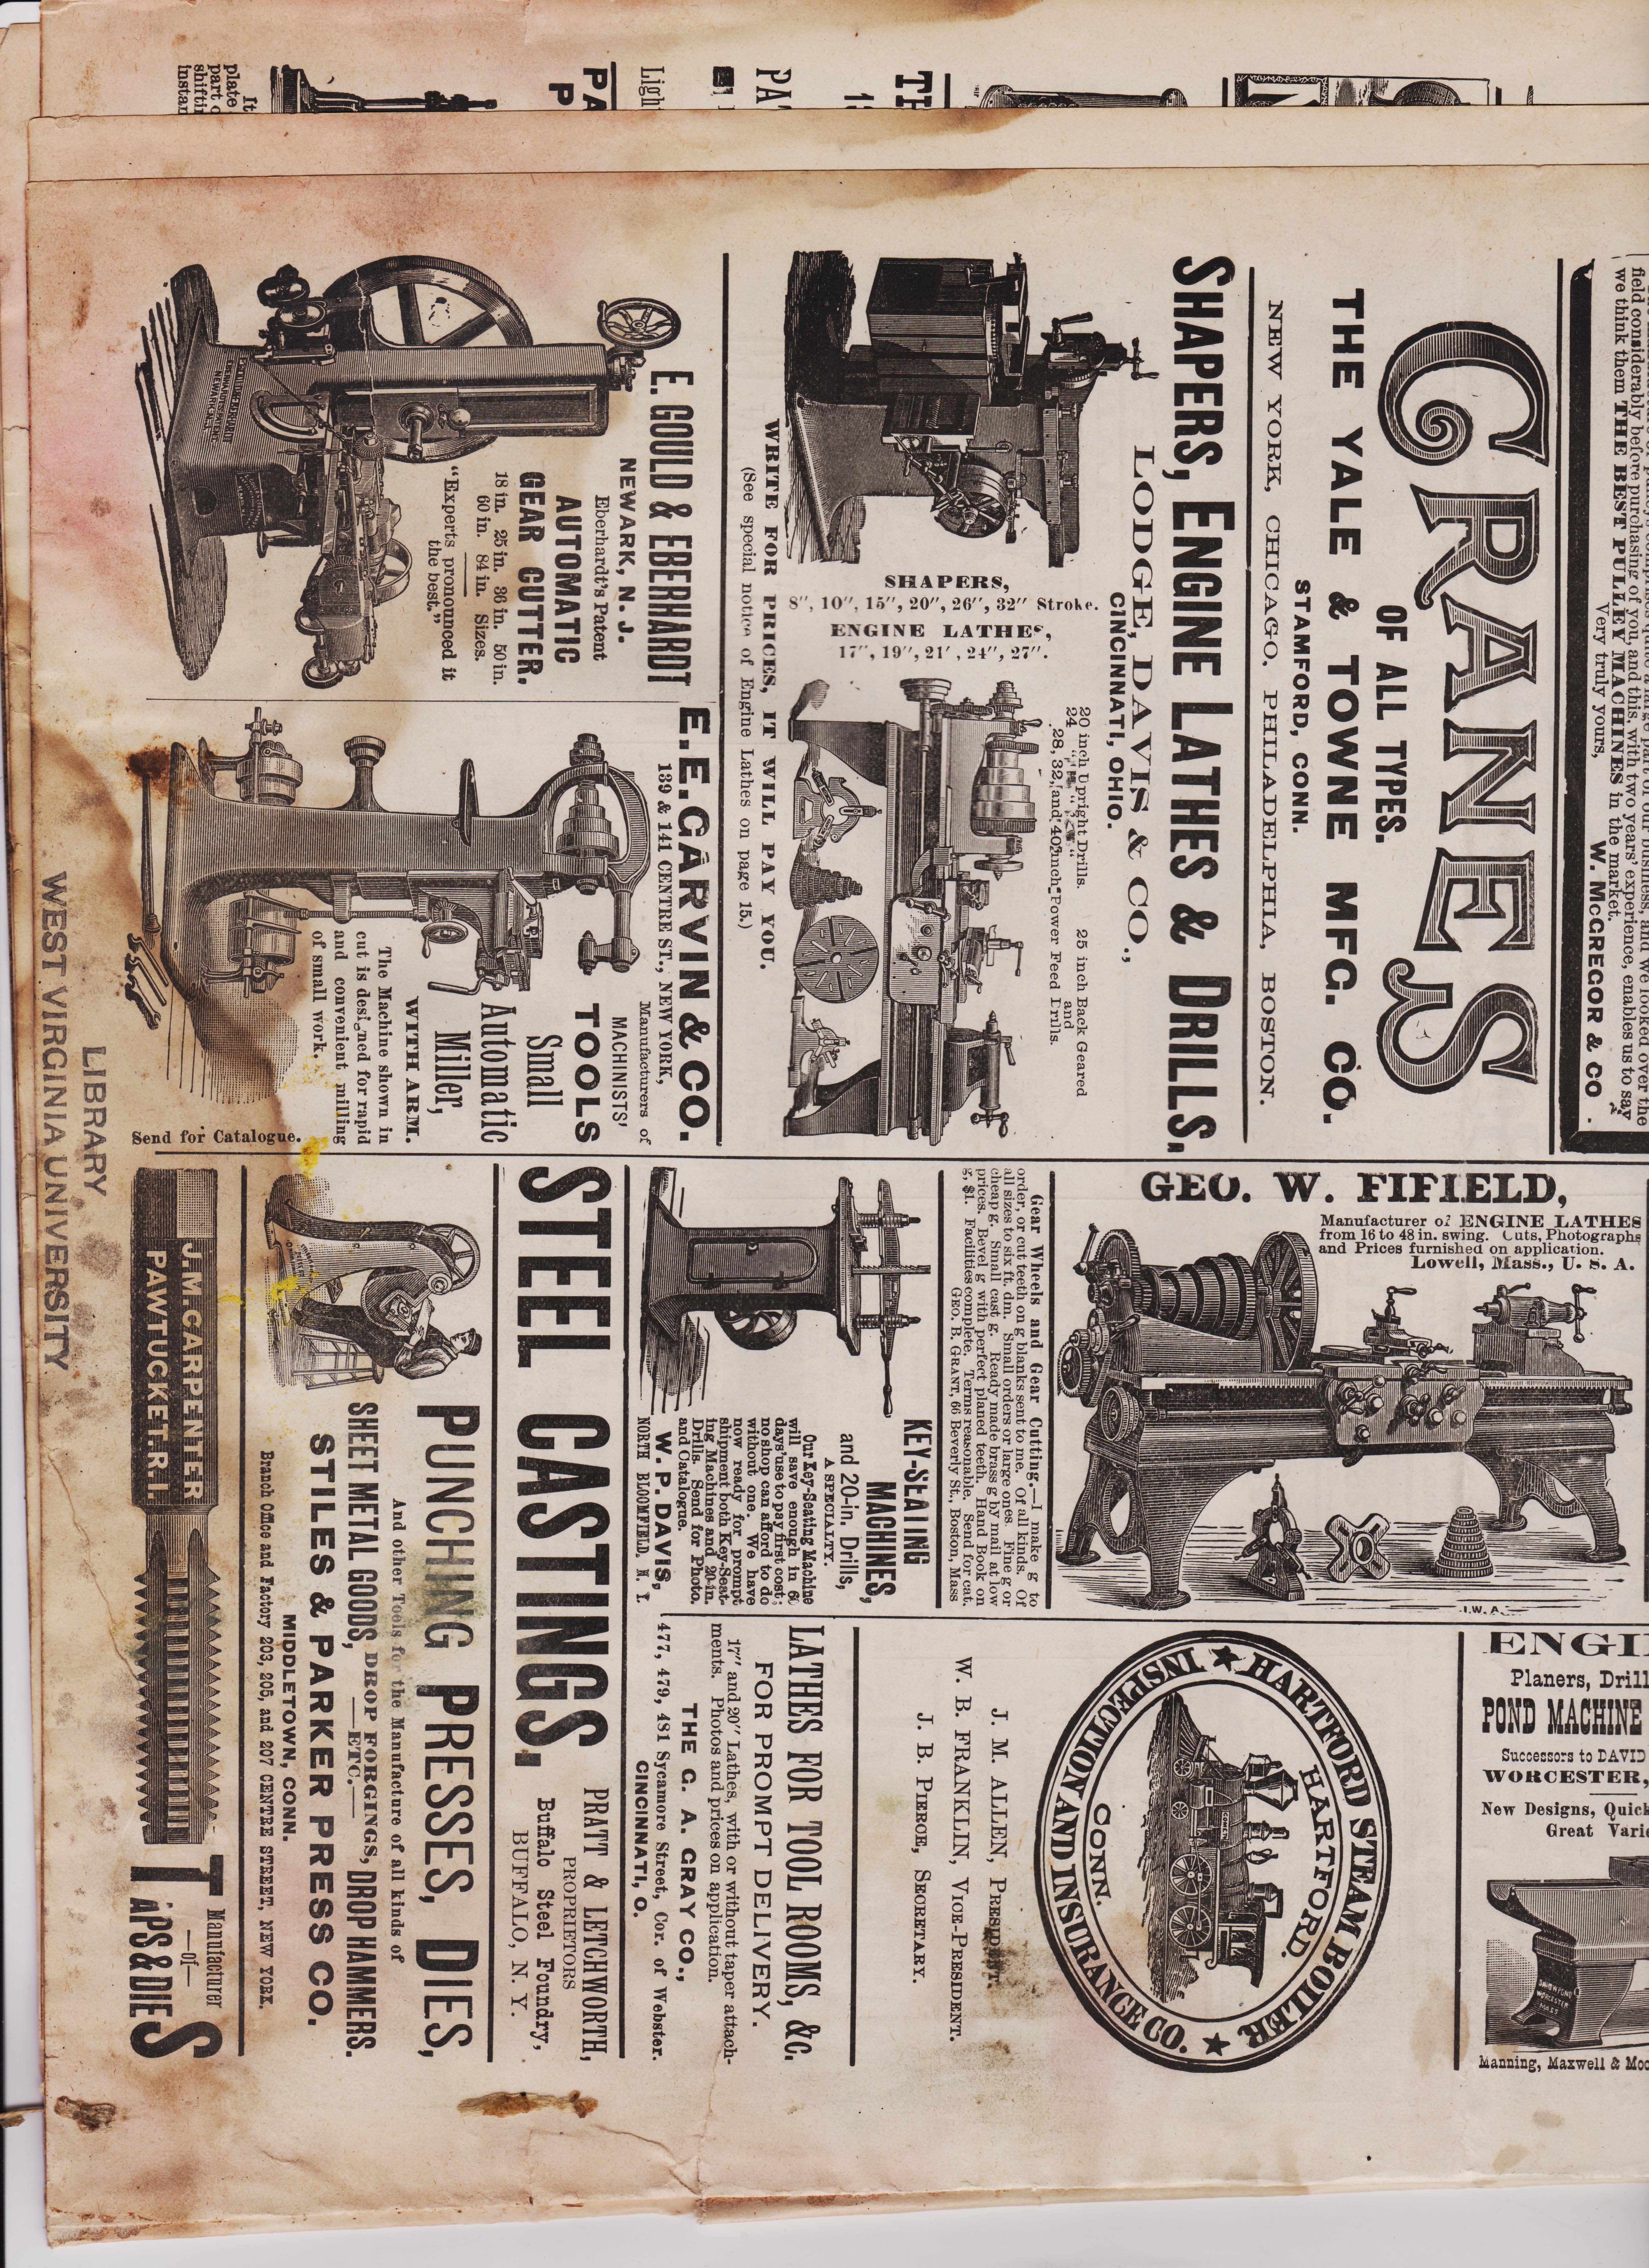 https://antiquemachinery.com/images-1887/American-Machinist-1887-Dec-31-pg-16-bot.jpeg